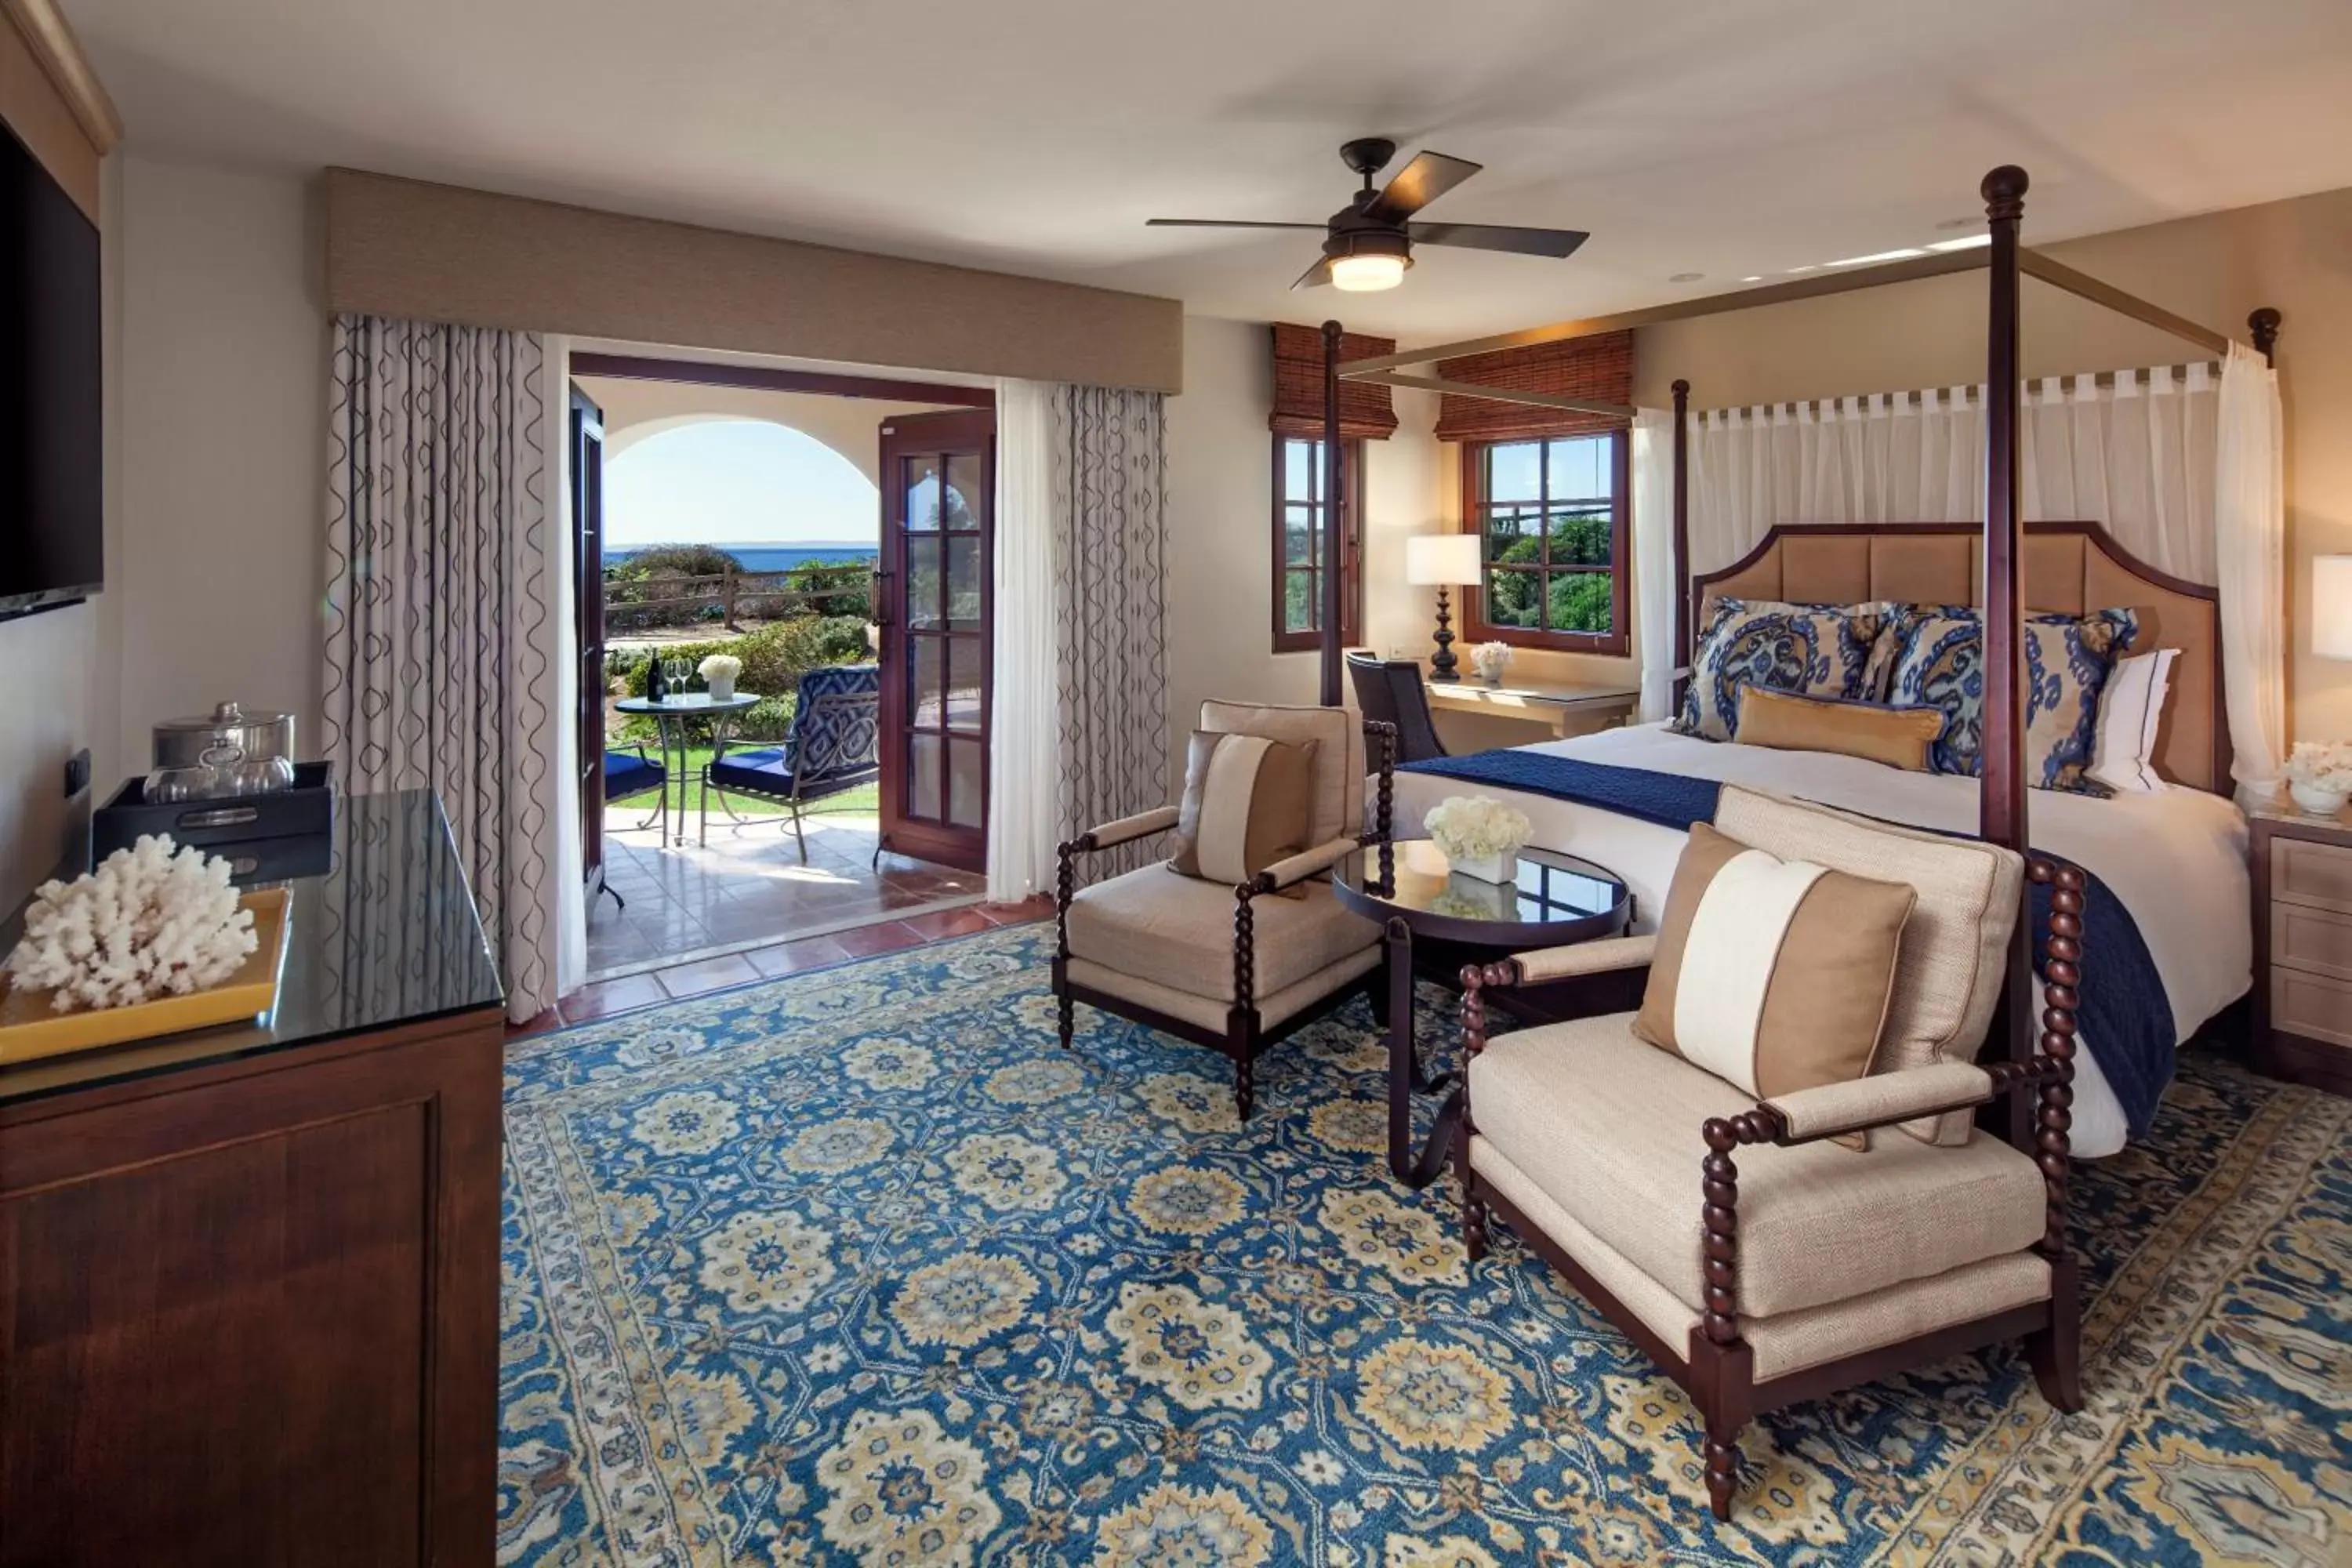 Signiture King Suite with Sofa Bed and Partial Ocean View in The Ritz-Carlton Bacara, Santa Barbara